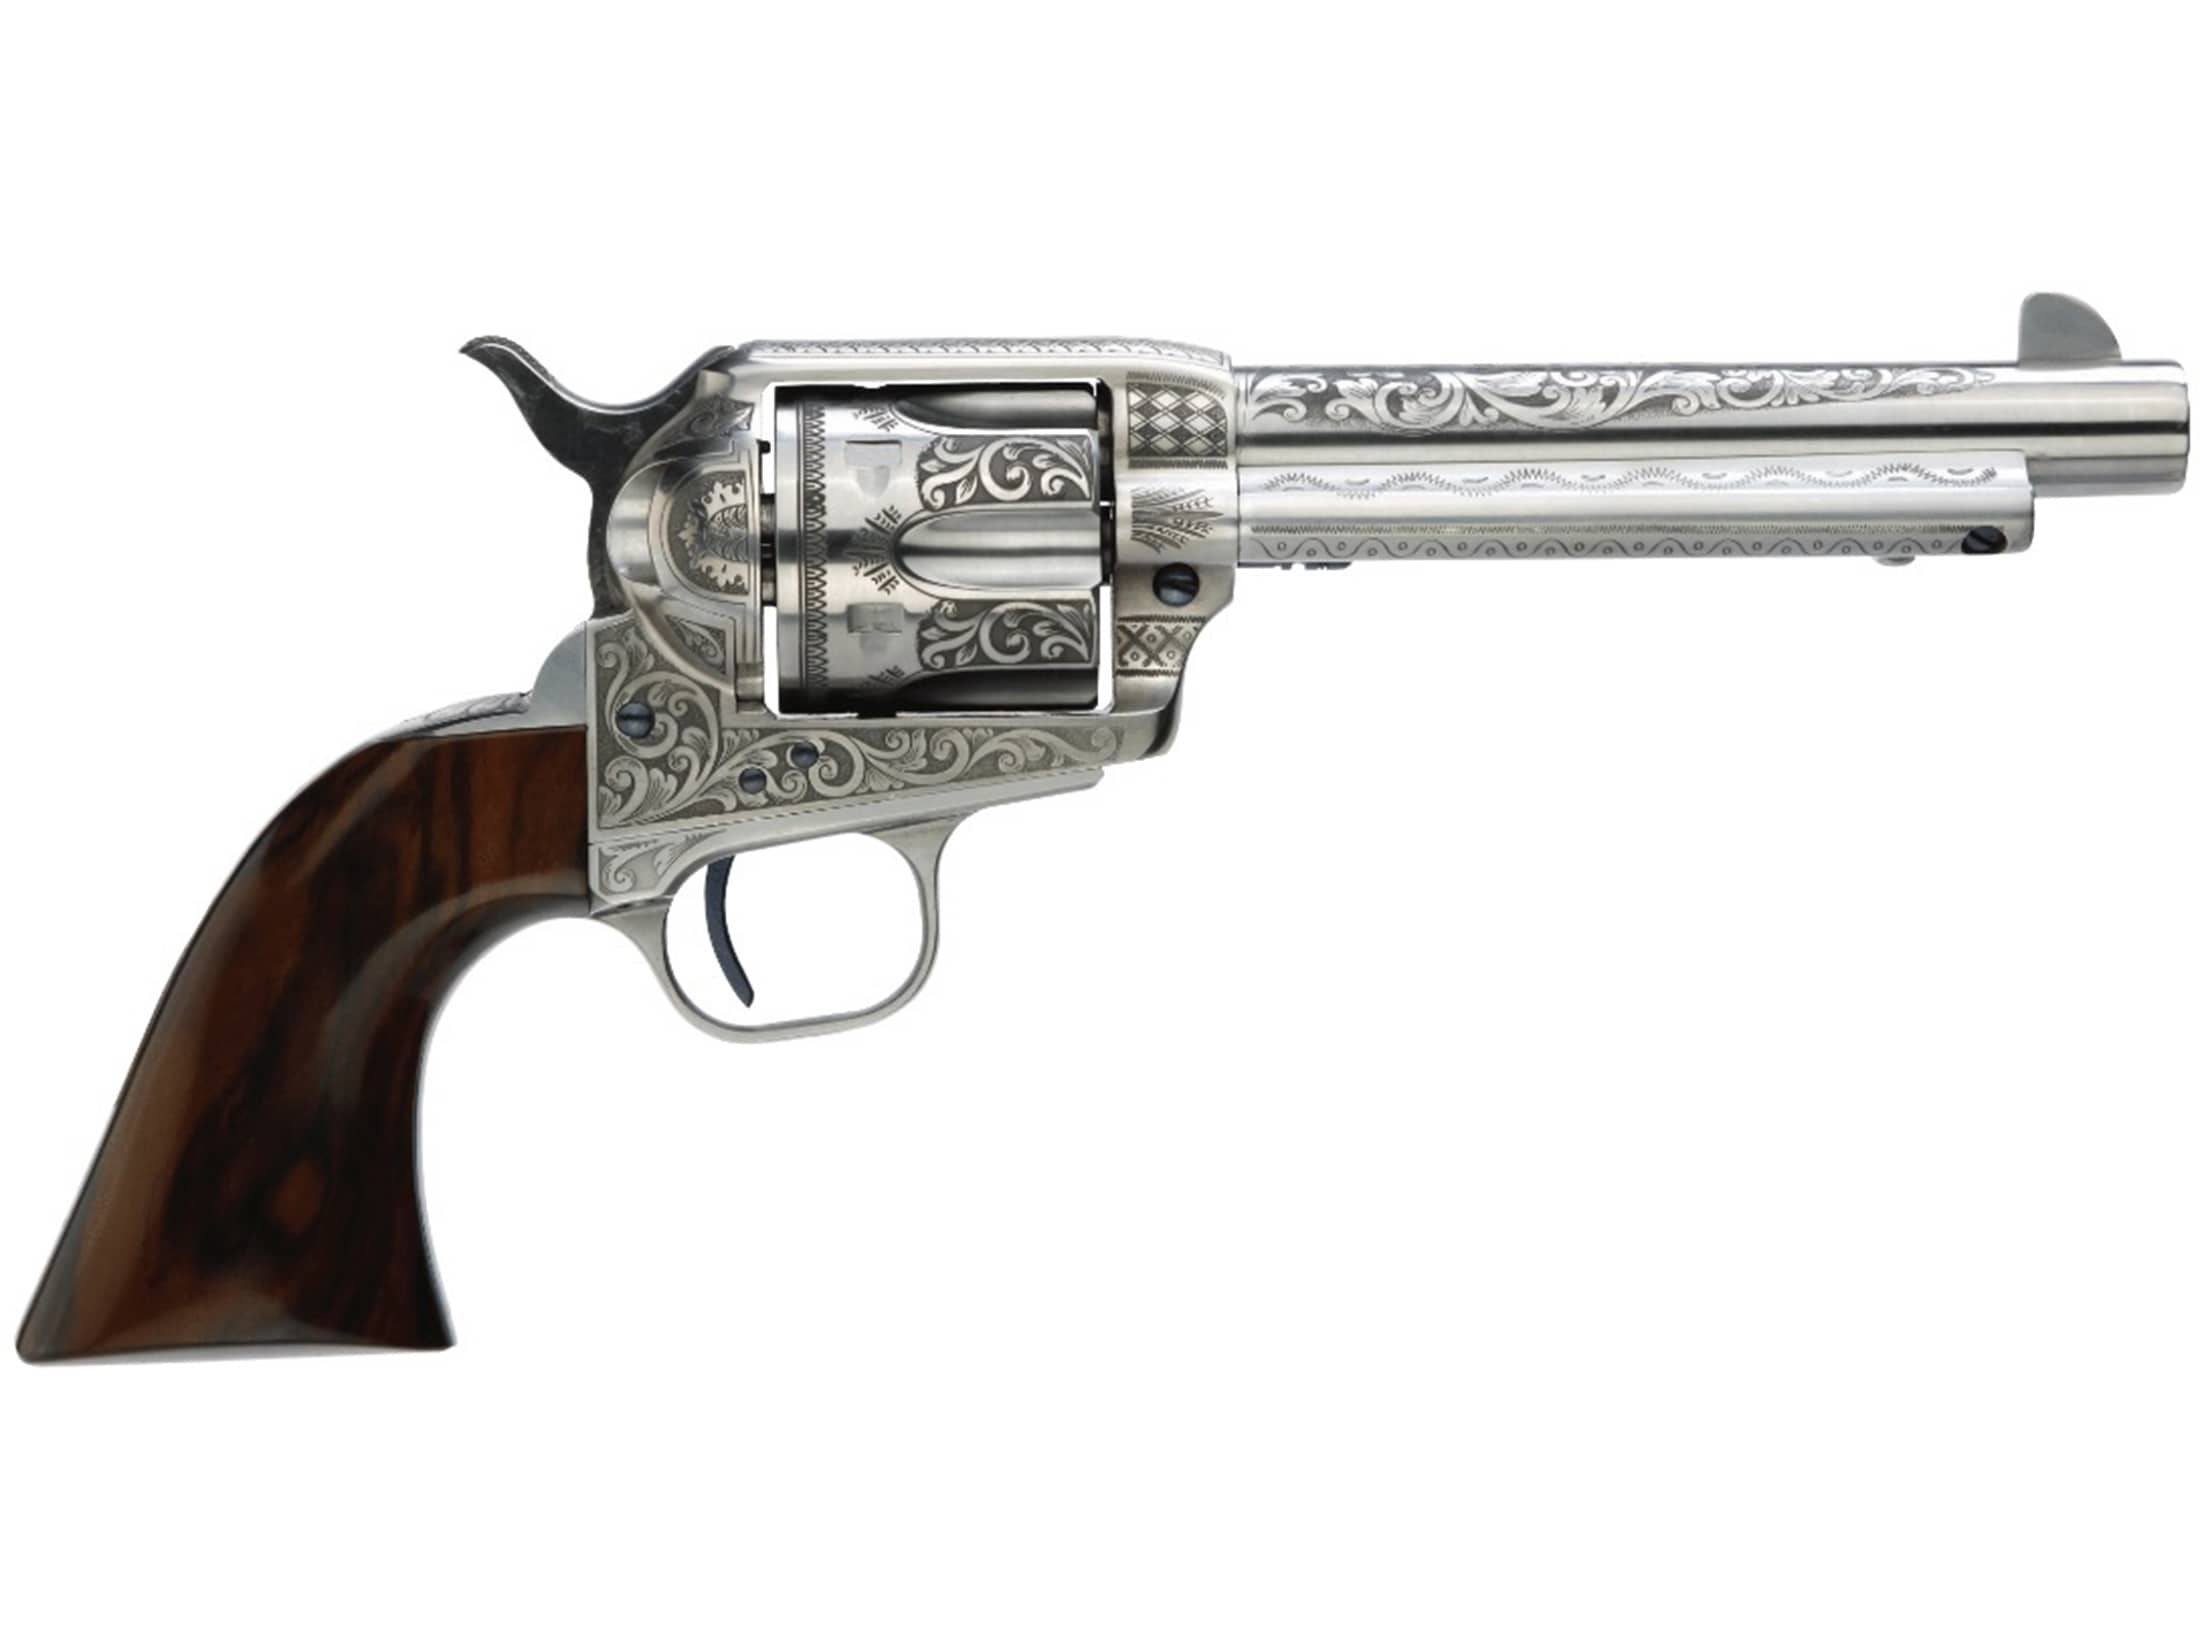 Taylor's & Company 1873 Cattleman Photo Engaved Revolver 45 Colt (Long Colt) 5.5" Barrel 6-Round White Heat Treated Walnut